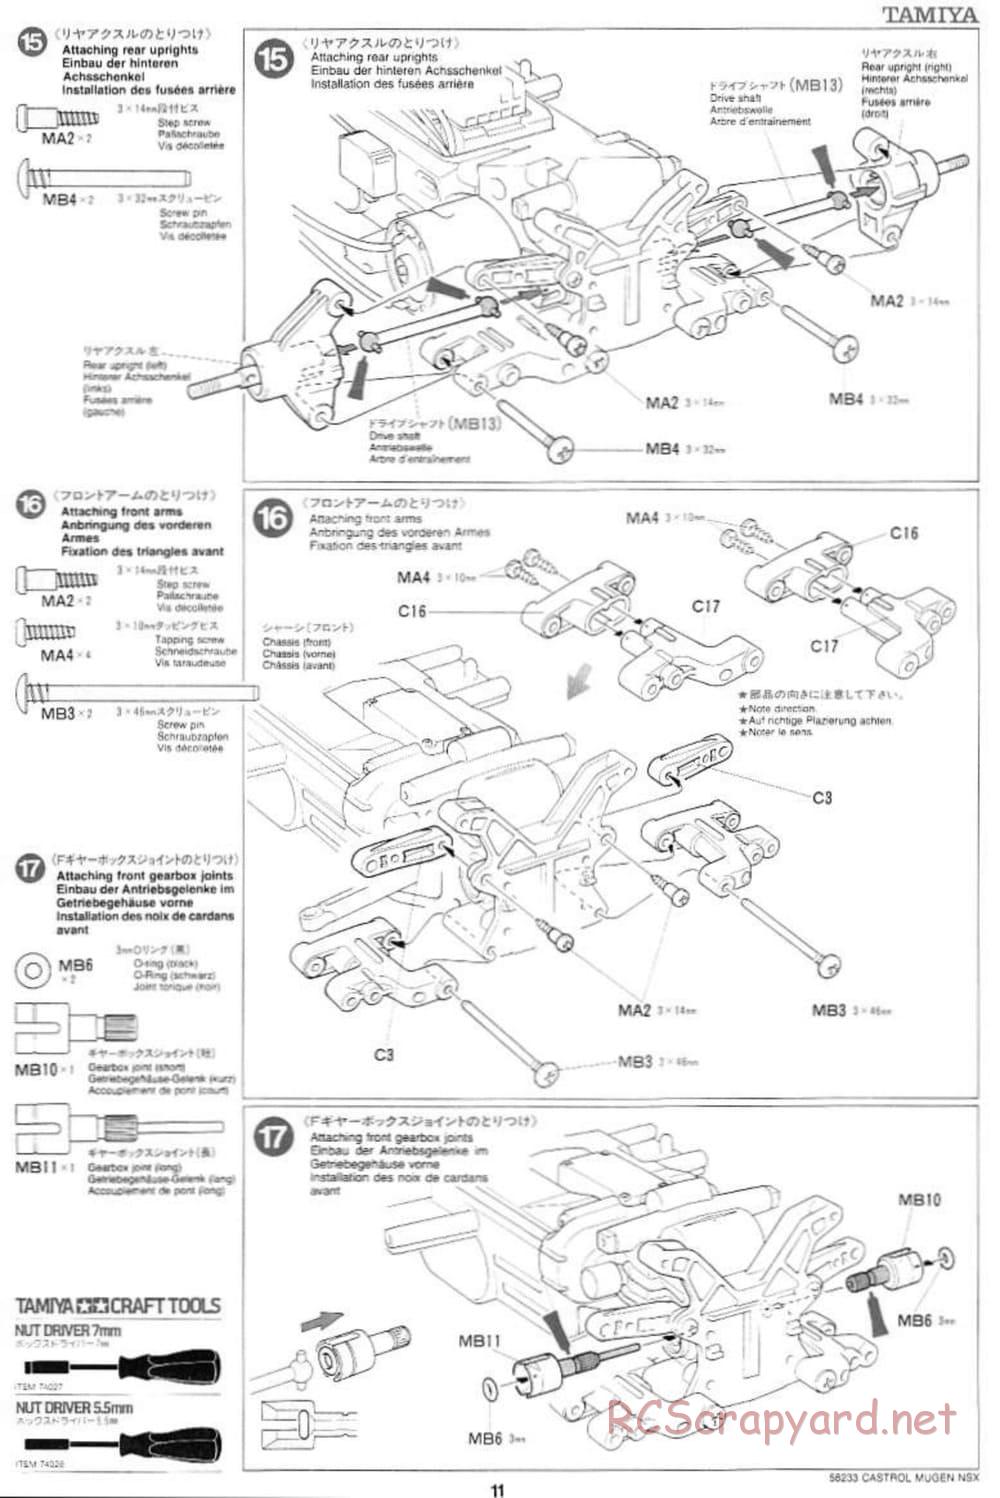 Tamiya - Castrol Mugen NSX - TL-01 Chassis - Manual - Page 11